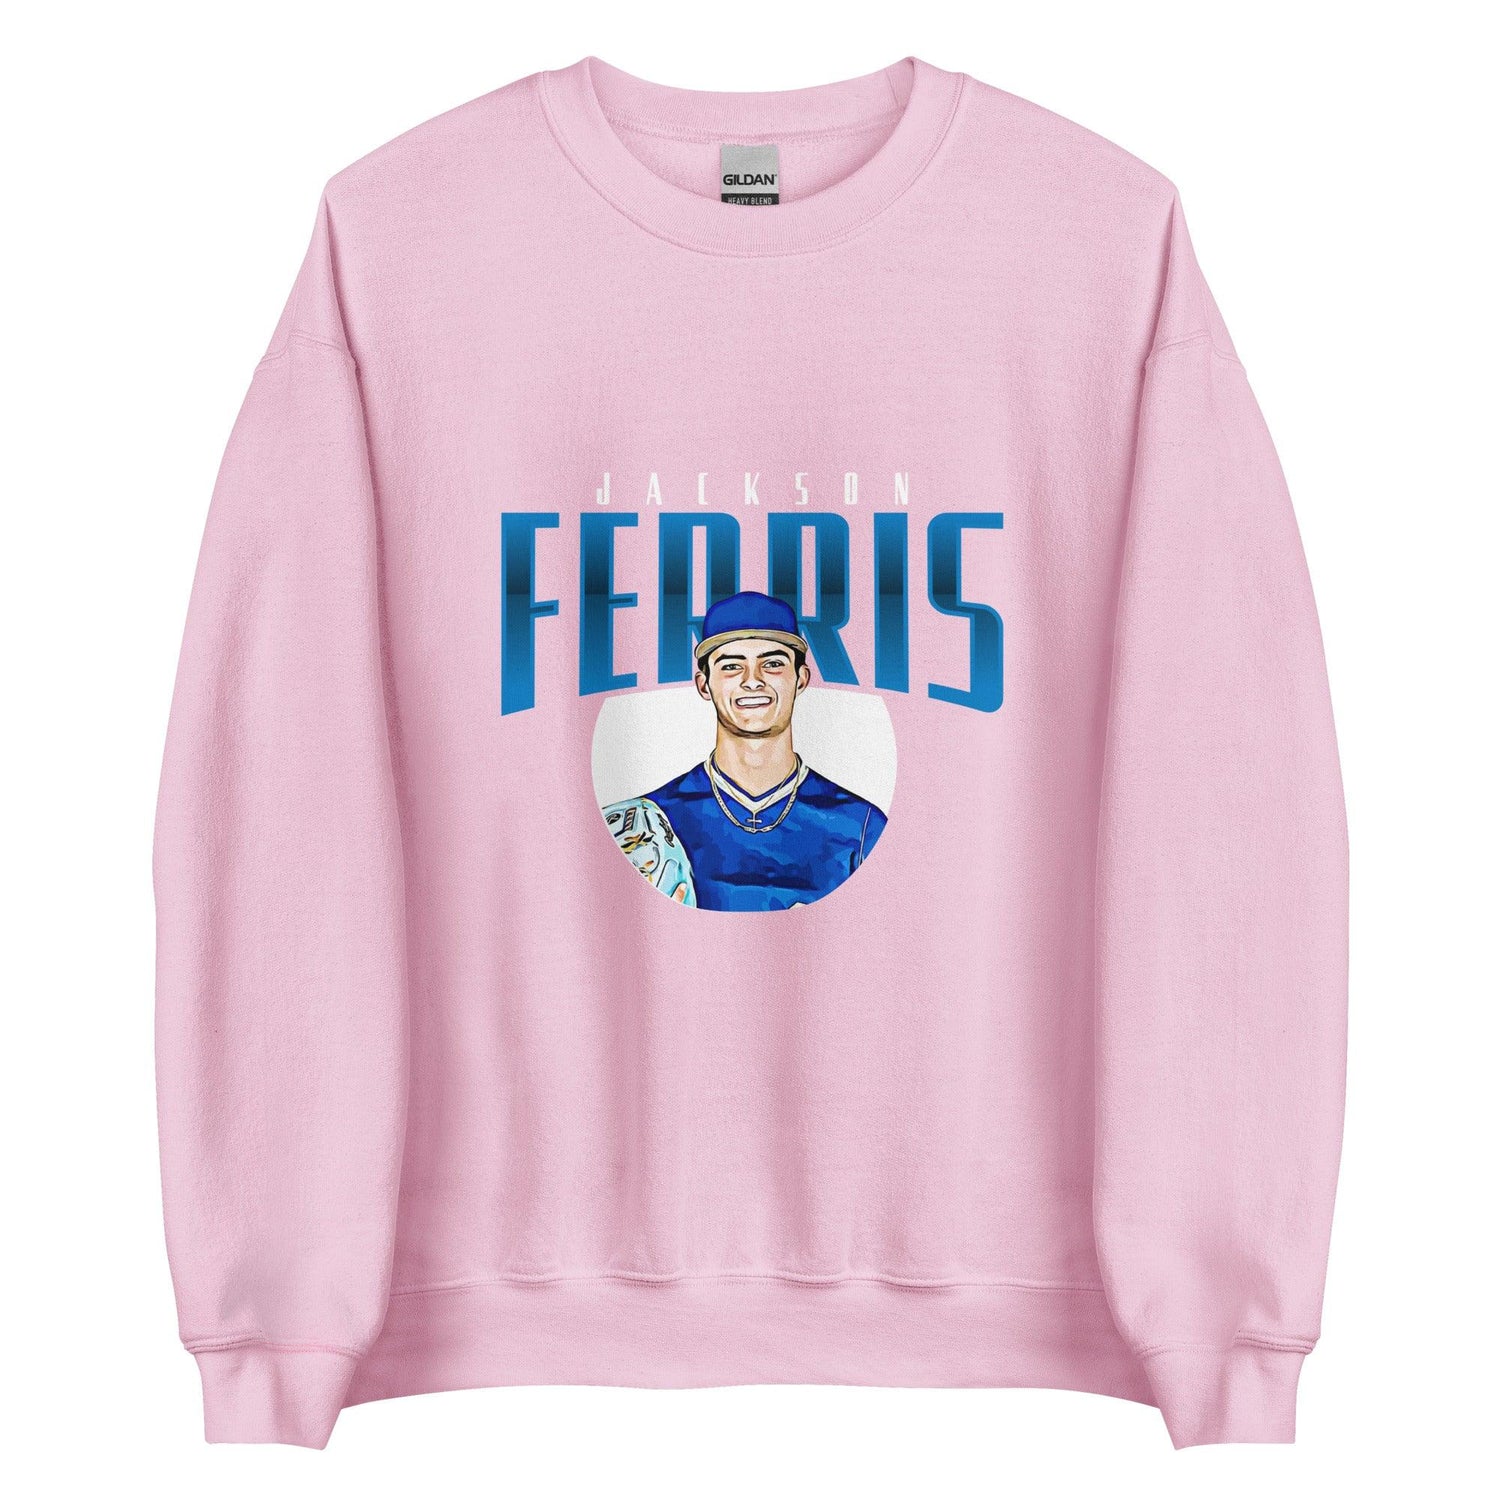 Jackson Ferris “Essential” Sweatshirt - Fan Arch